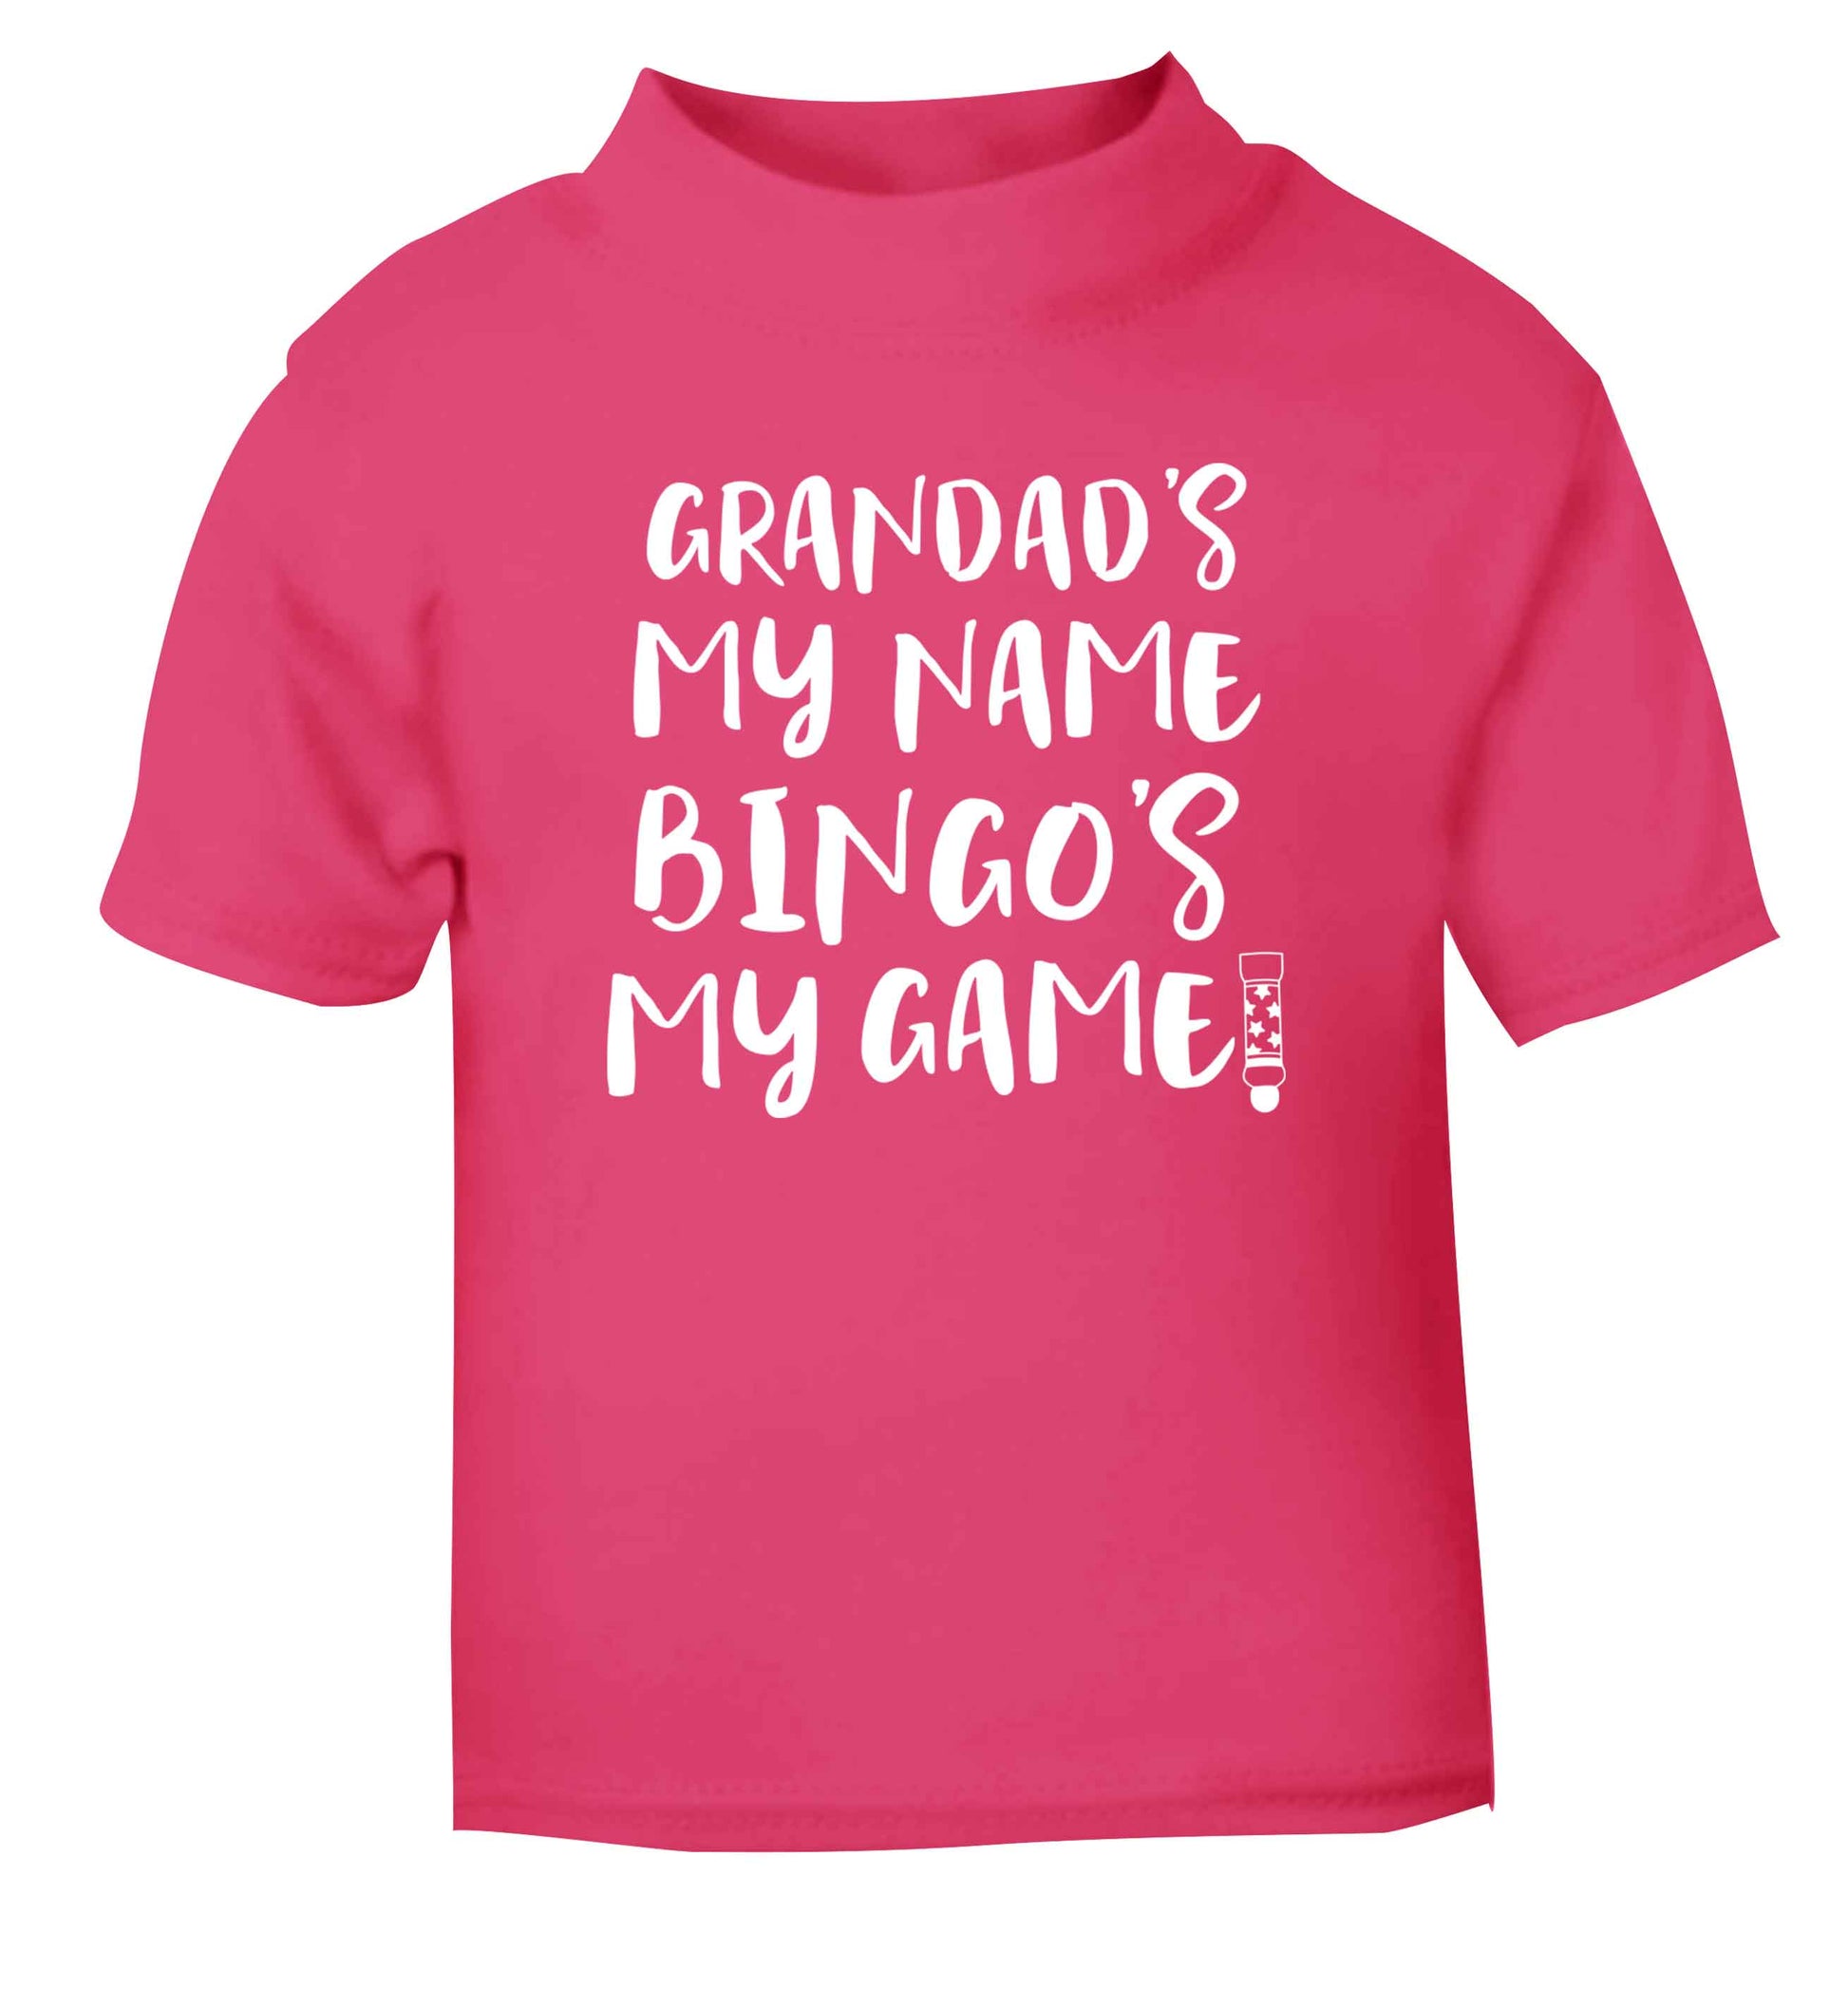 Grandad's my name bingo's my game! pink Baby Toddler Tshirt 2 Years